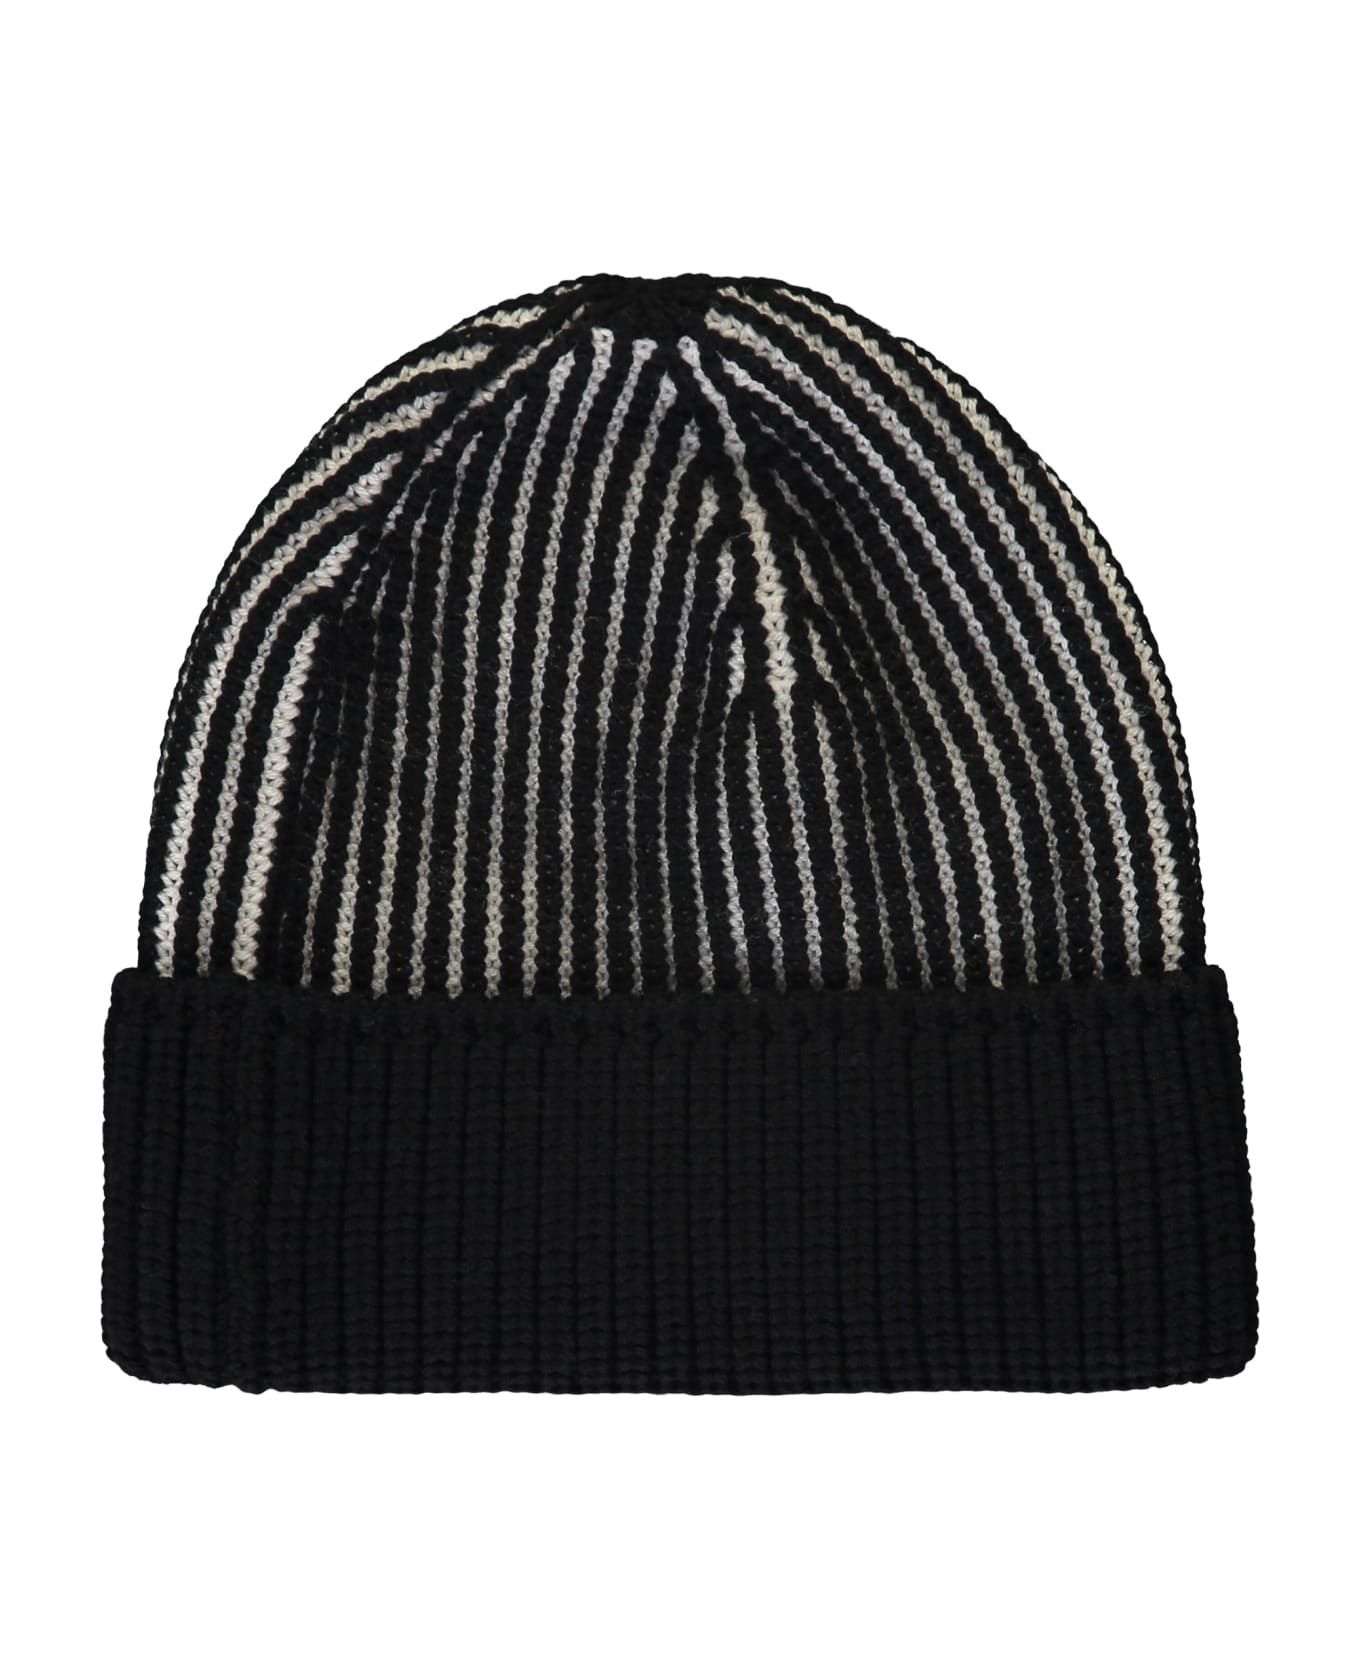 Canada Goose Wool Hat - black